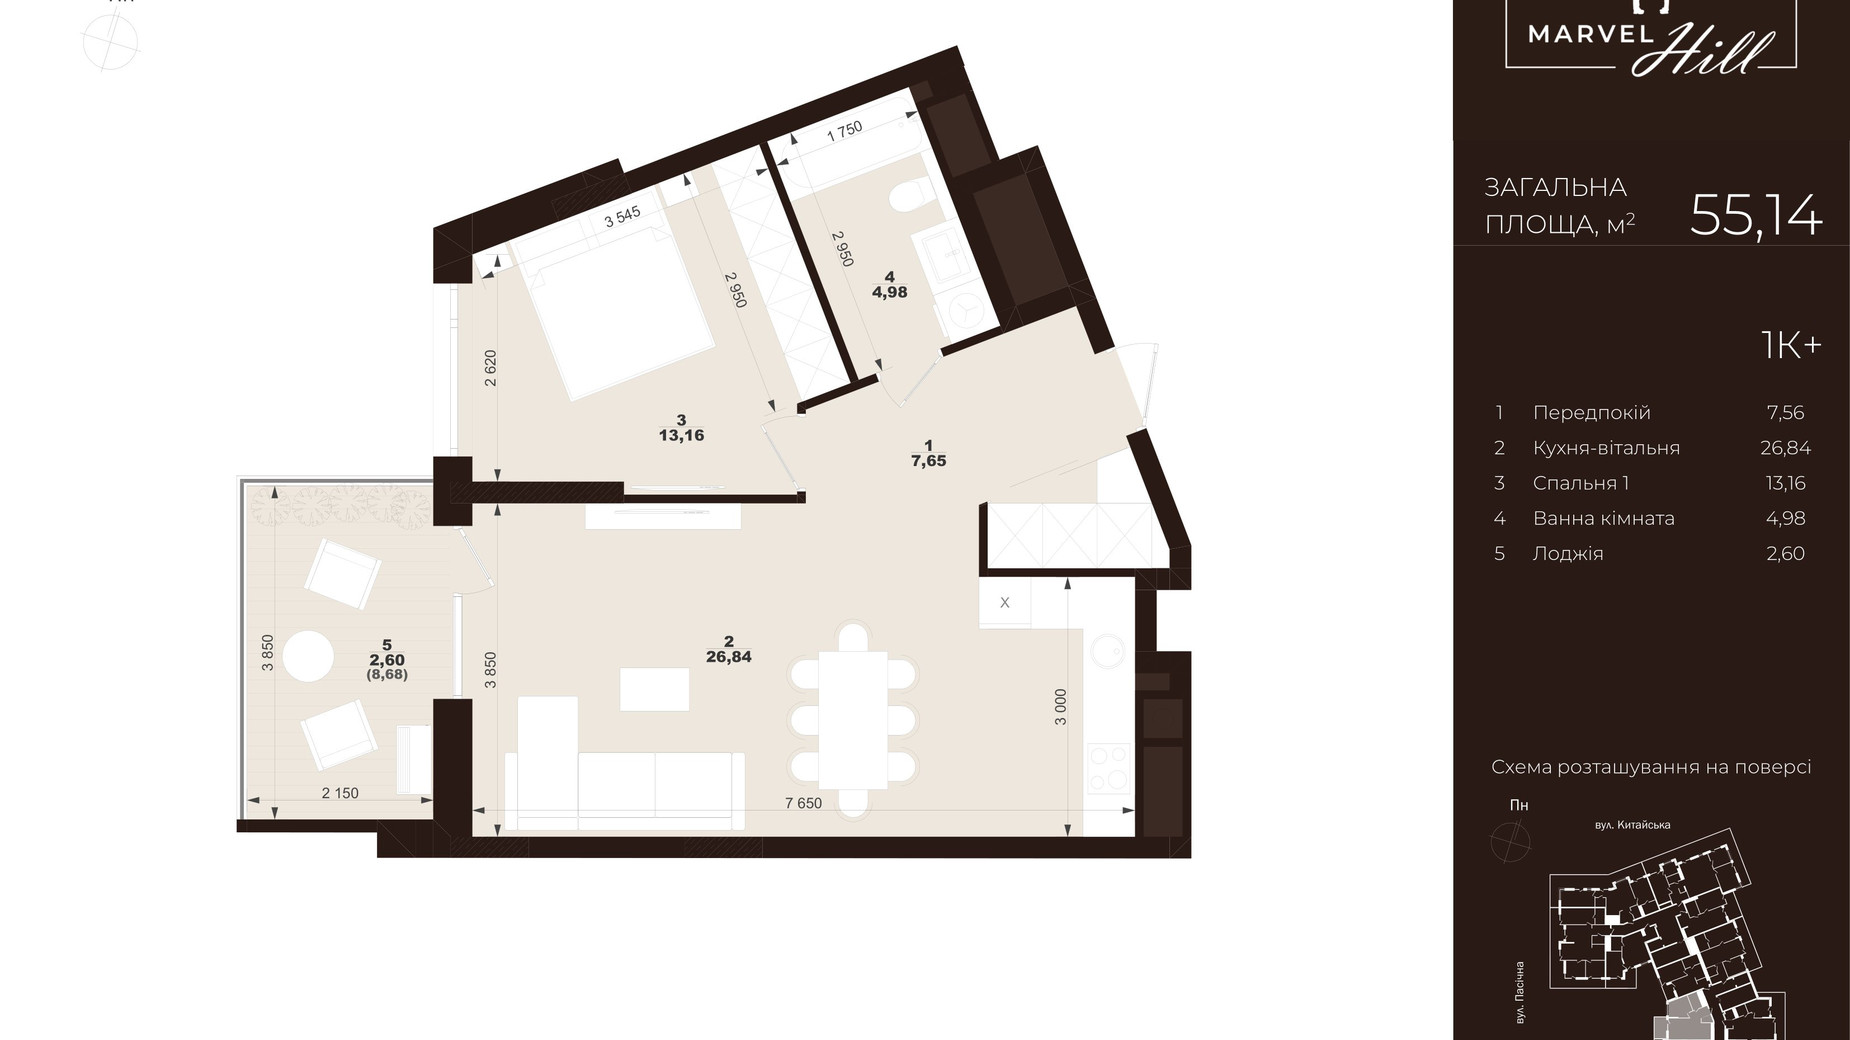 Планування 1-кімнатної квартири в ЖК Marvel Hill 55.14 м², фото 691443